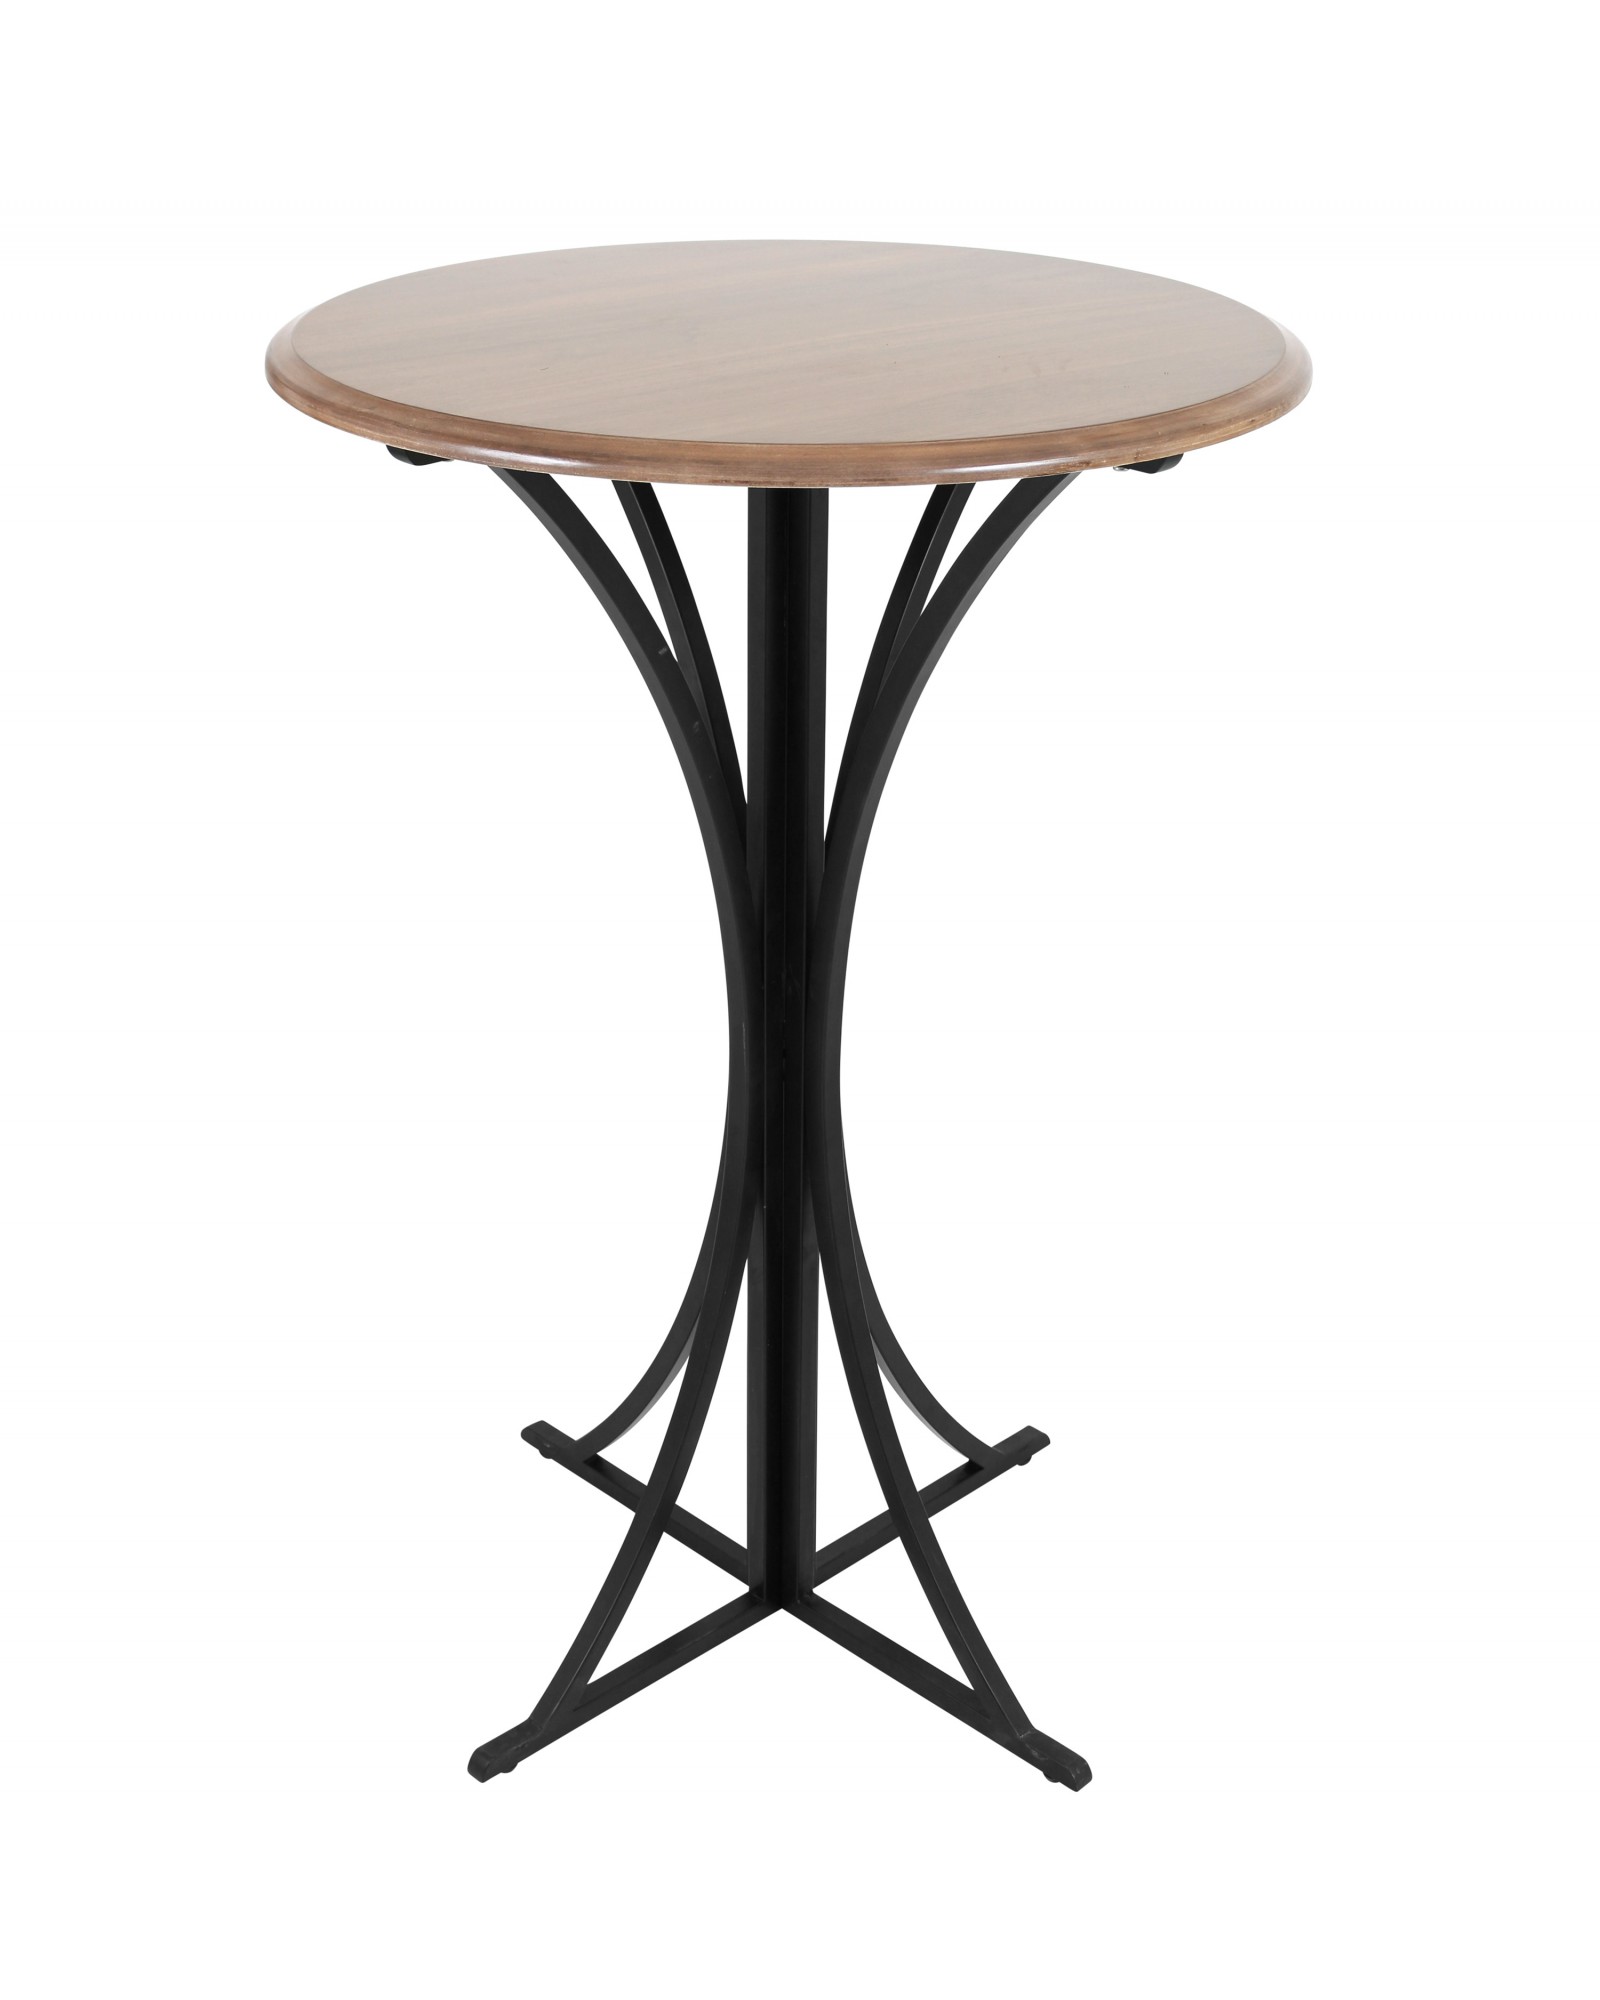 Boro Contemporary Bar Table in Walnut and Black